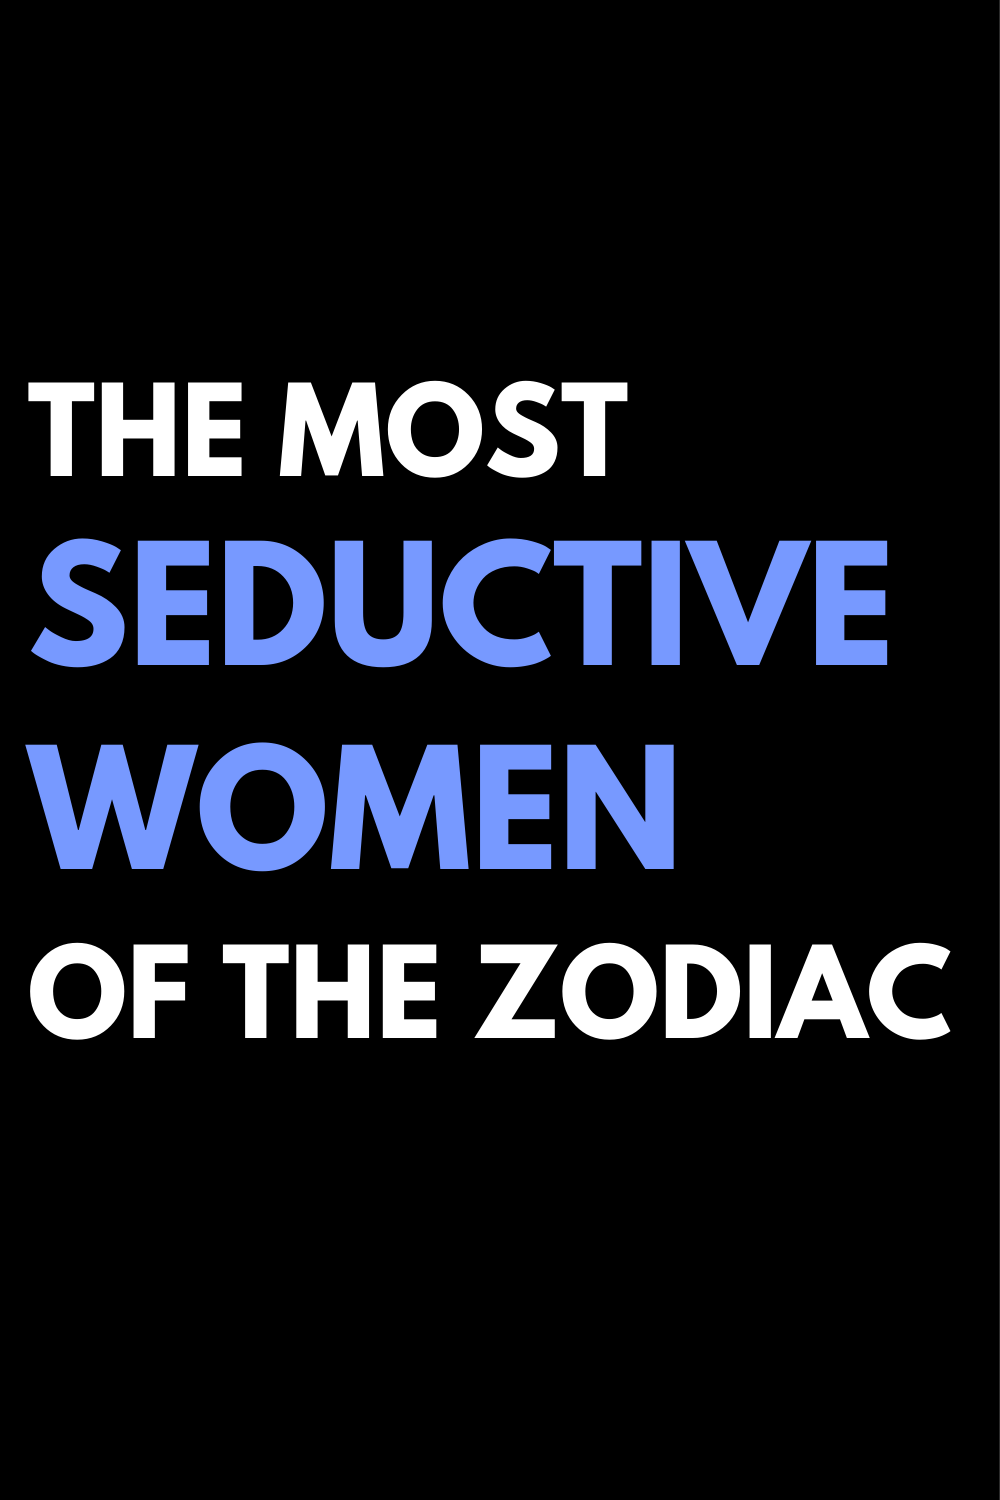 The most seductive women of the zodiac